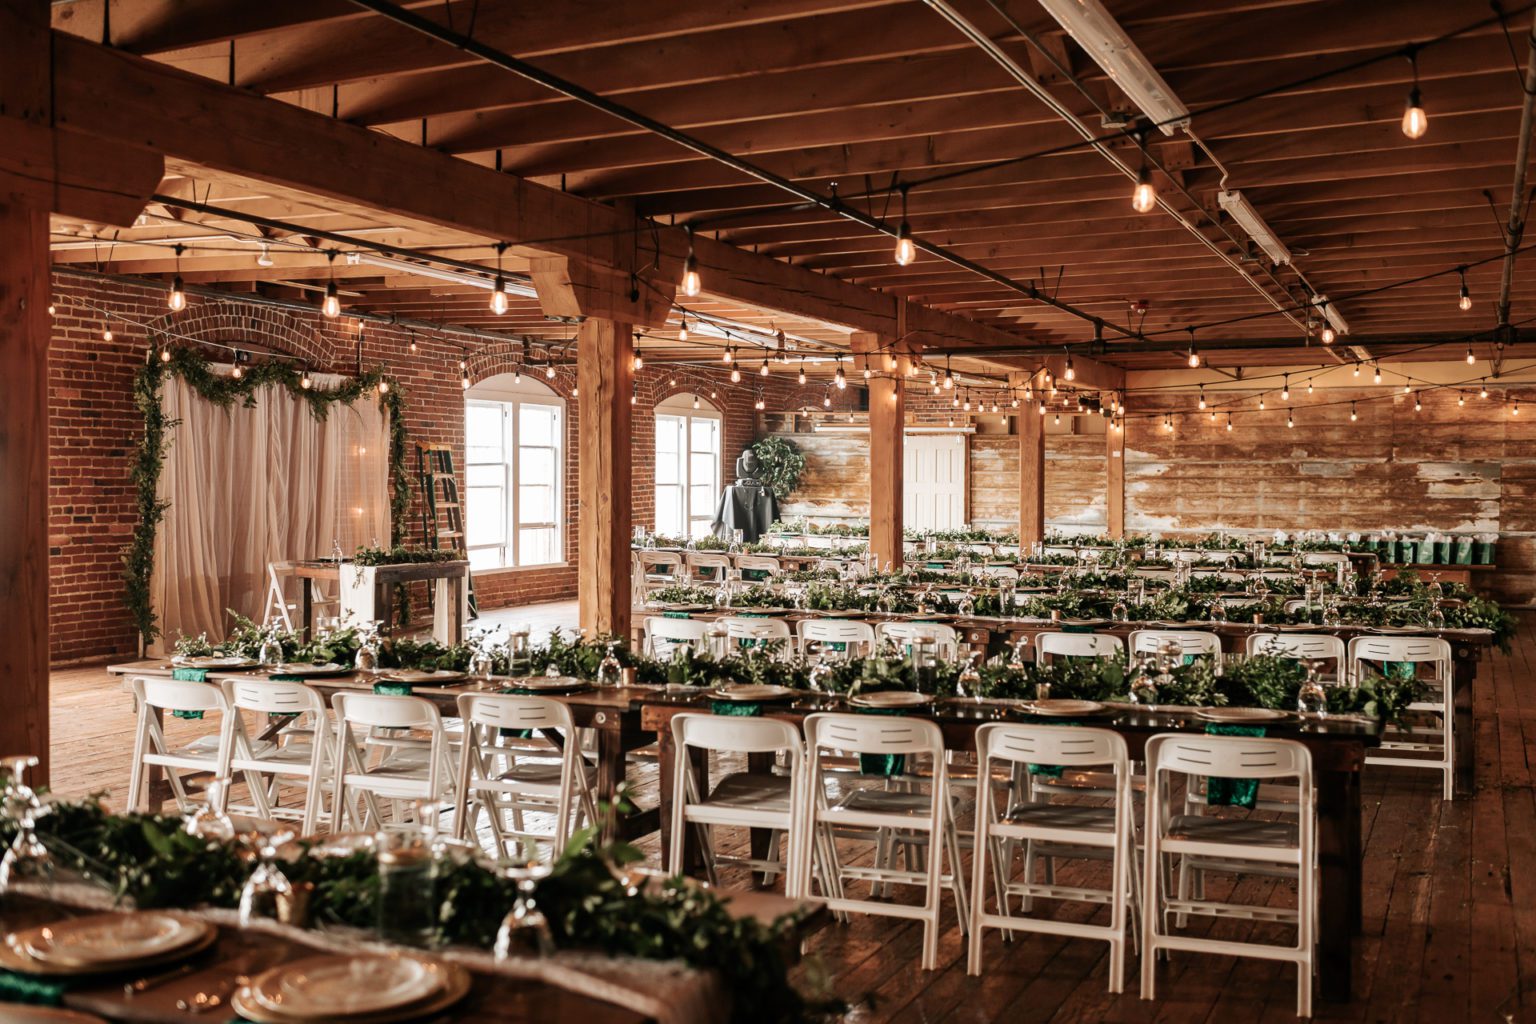 The Loft Wedding Venue in Chehalis, Washington